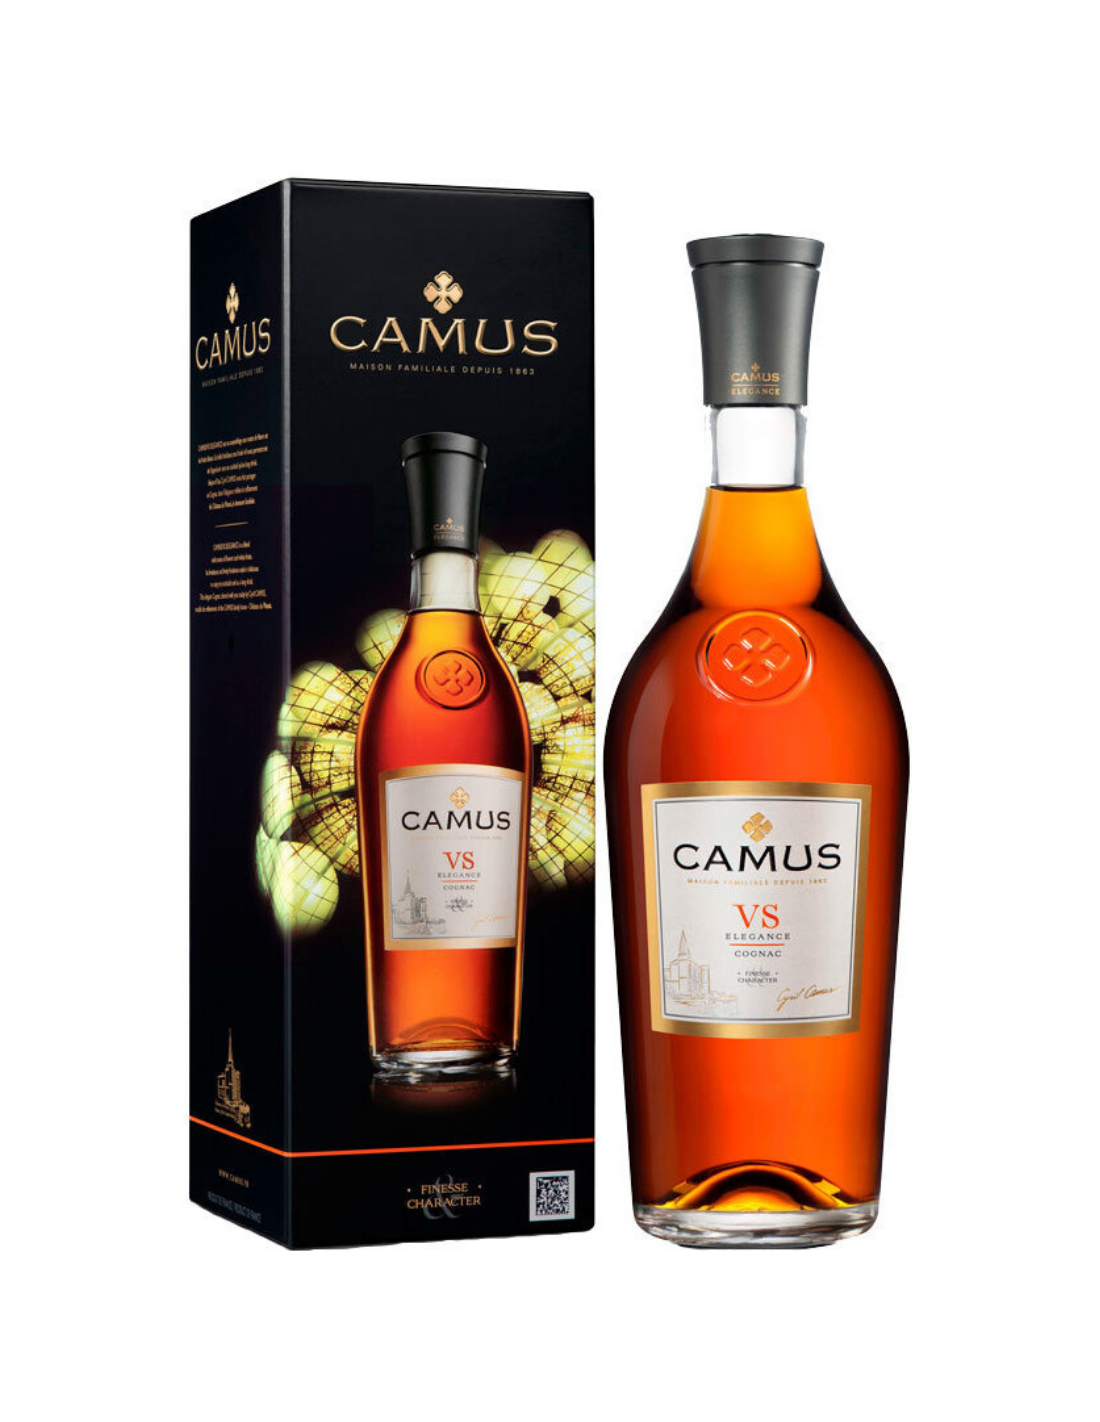 Coniac Camus VS Elegance, 40% alc., 0.7L, Franta alcooldiscount.ro